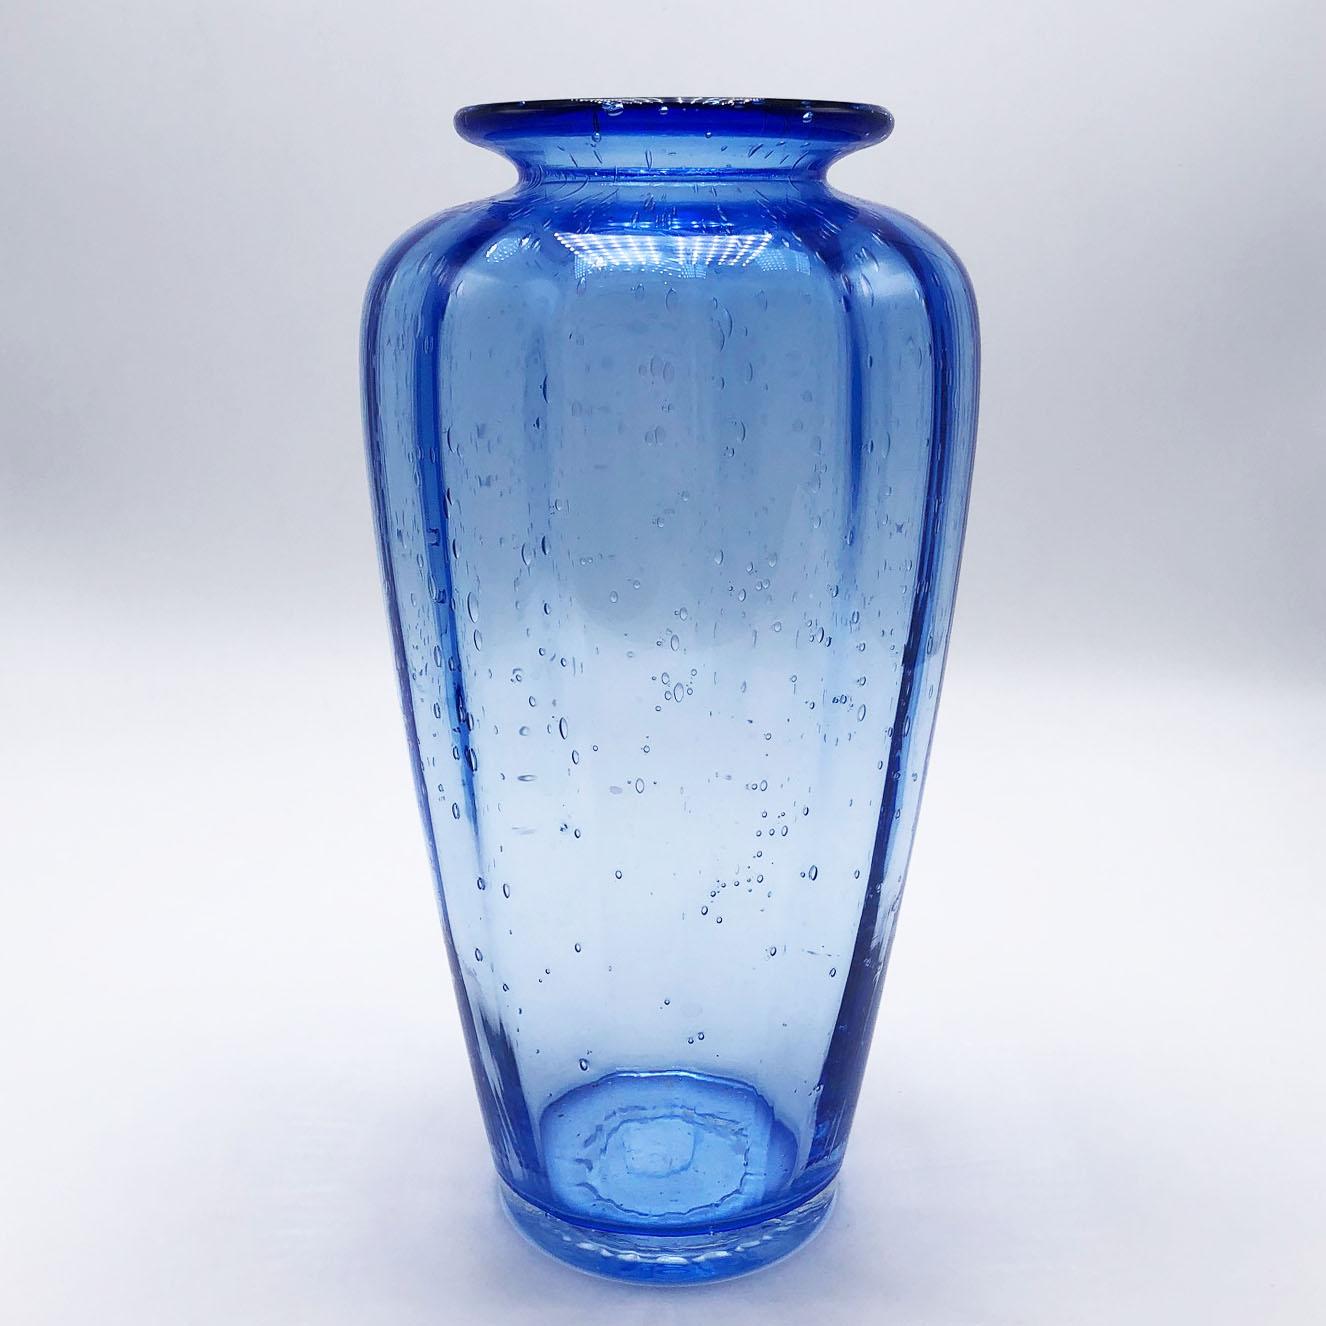 Blue ribbed Murano vase by Martinuzzi Soffiato, circa 1920
$1100.